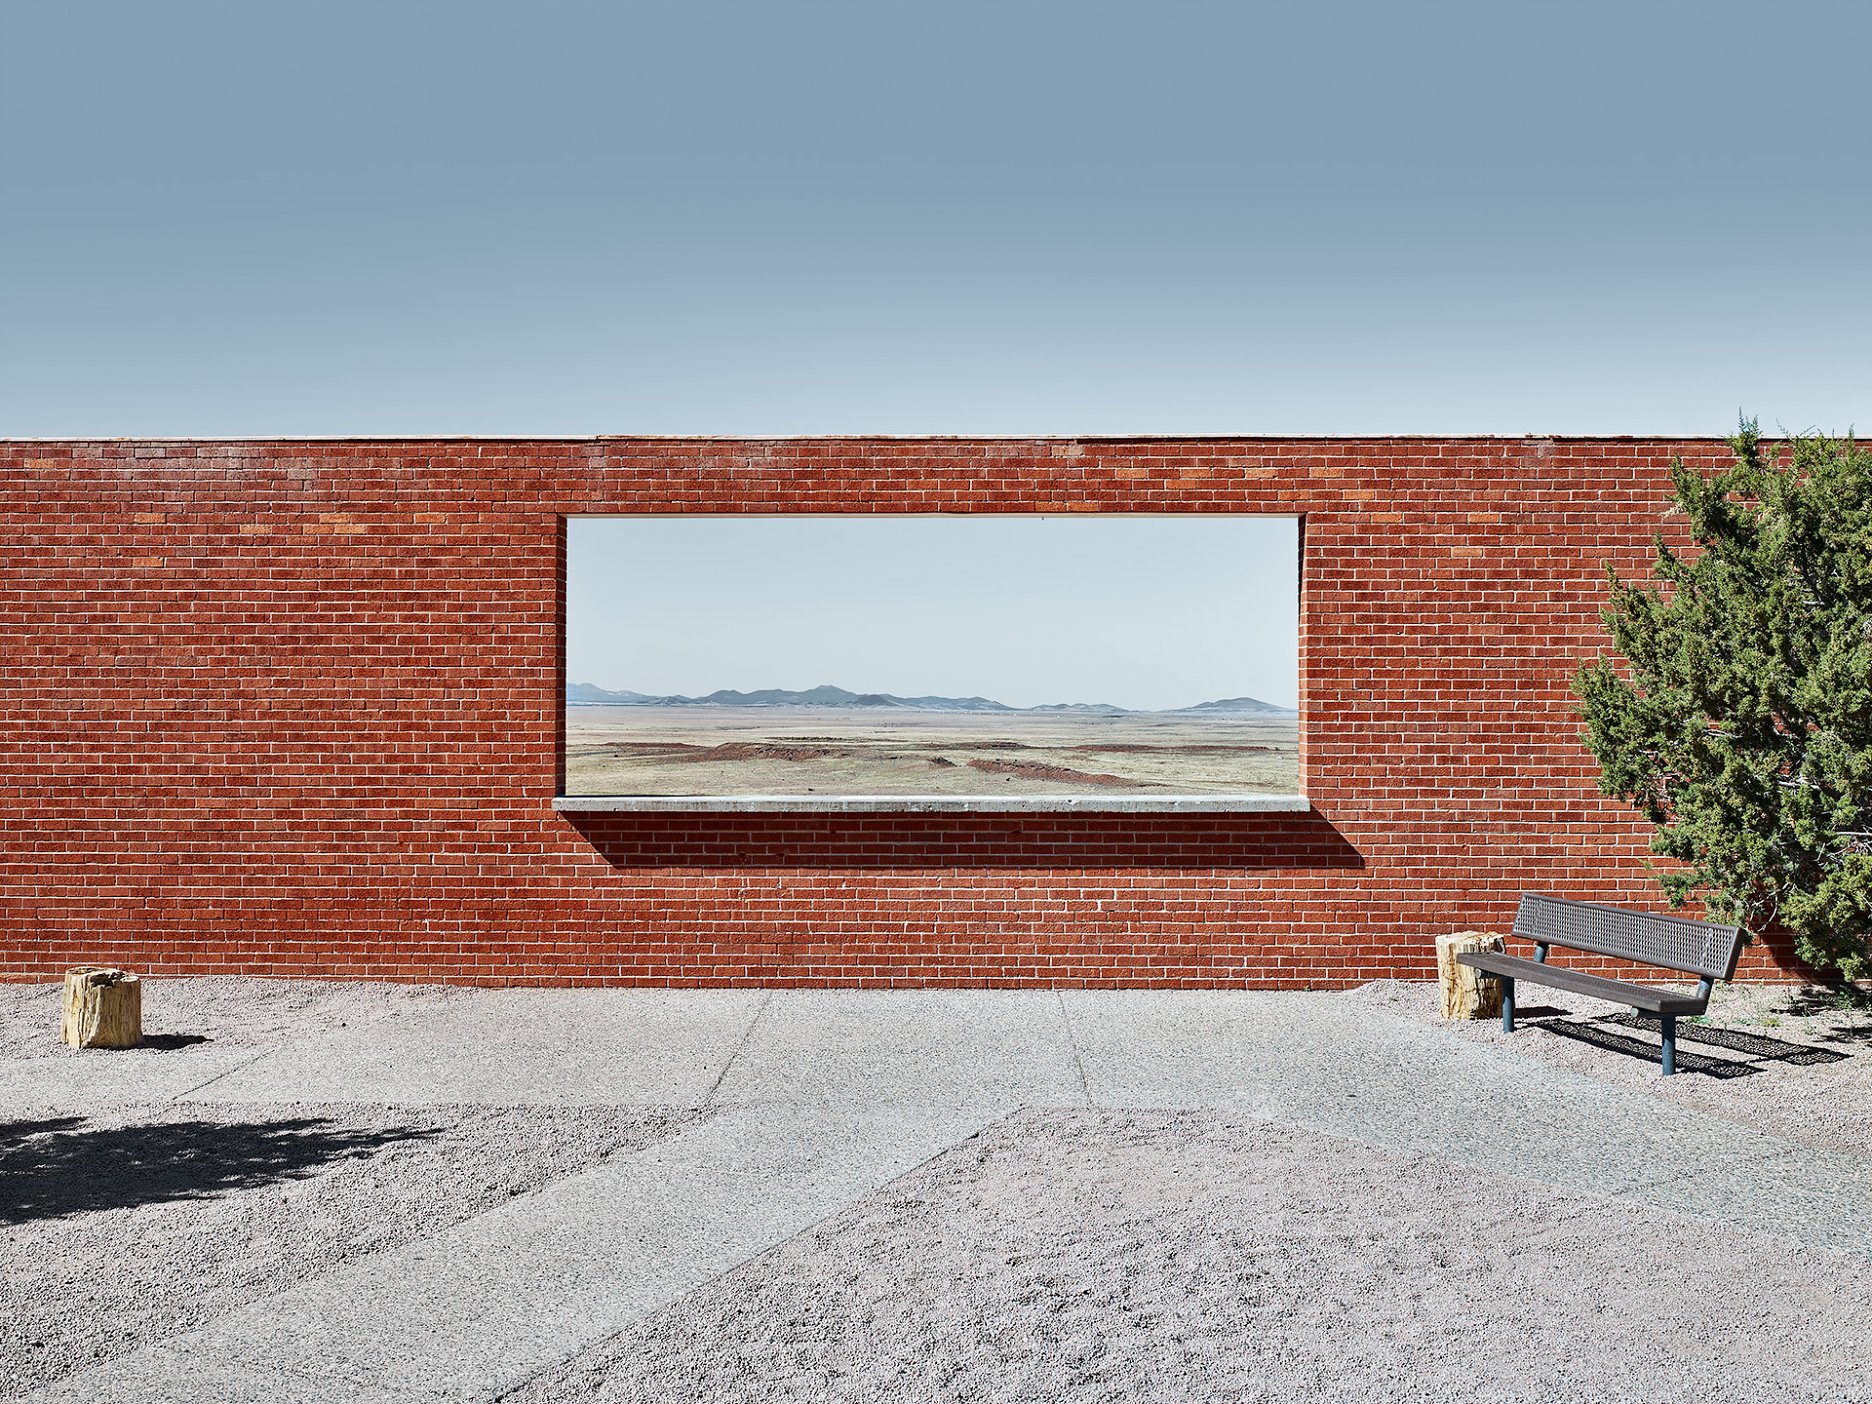 The Wall Frame, Arizona, Barrington Crater entrance compound, Arizona, 2015 